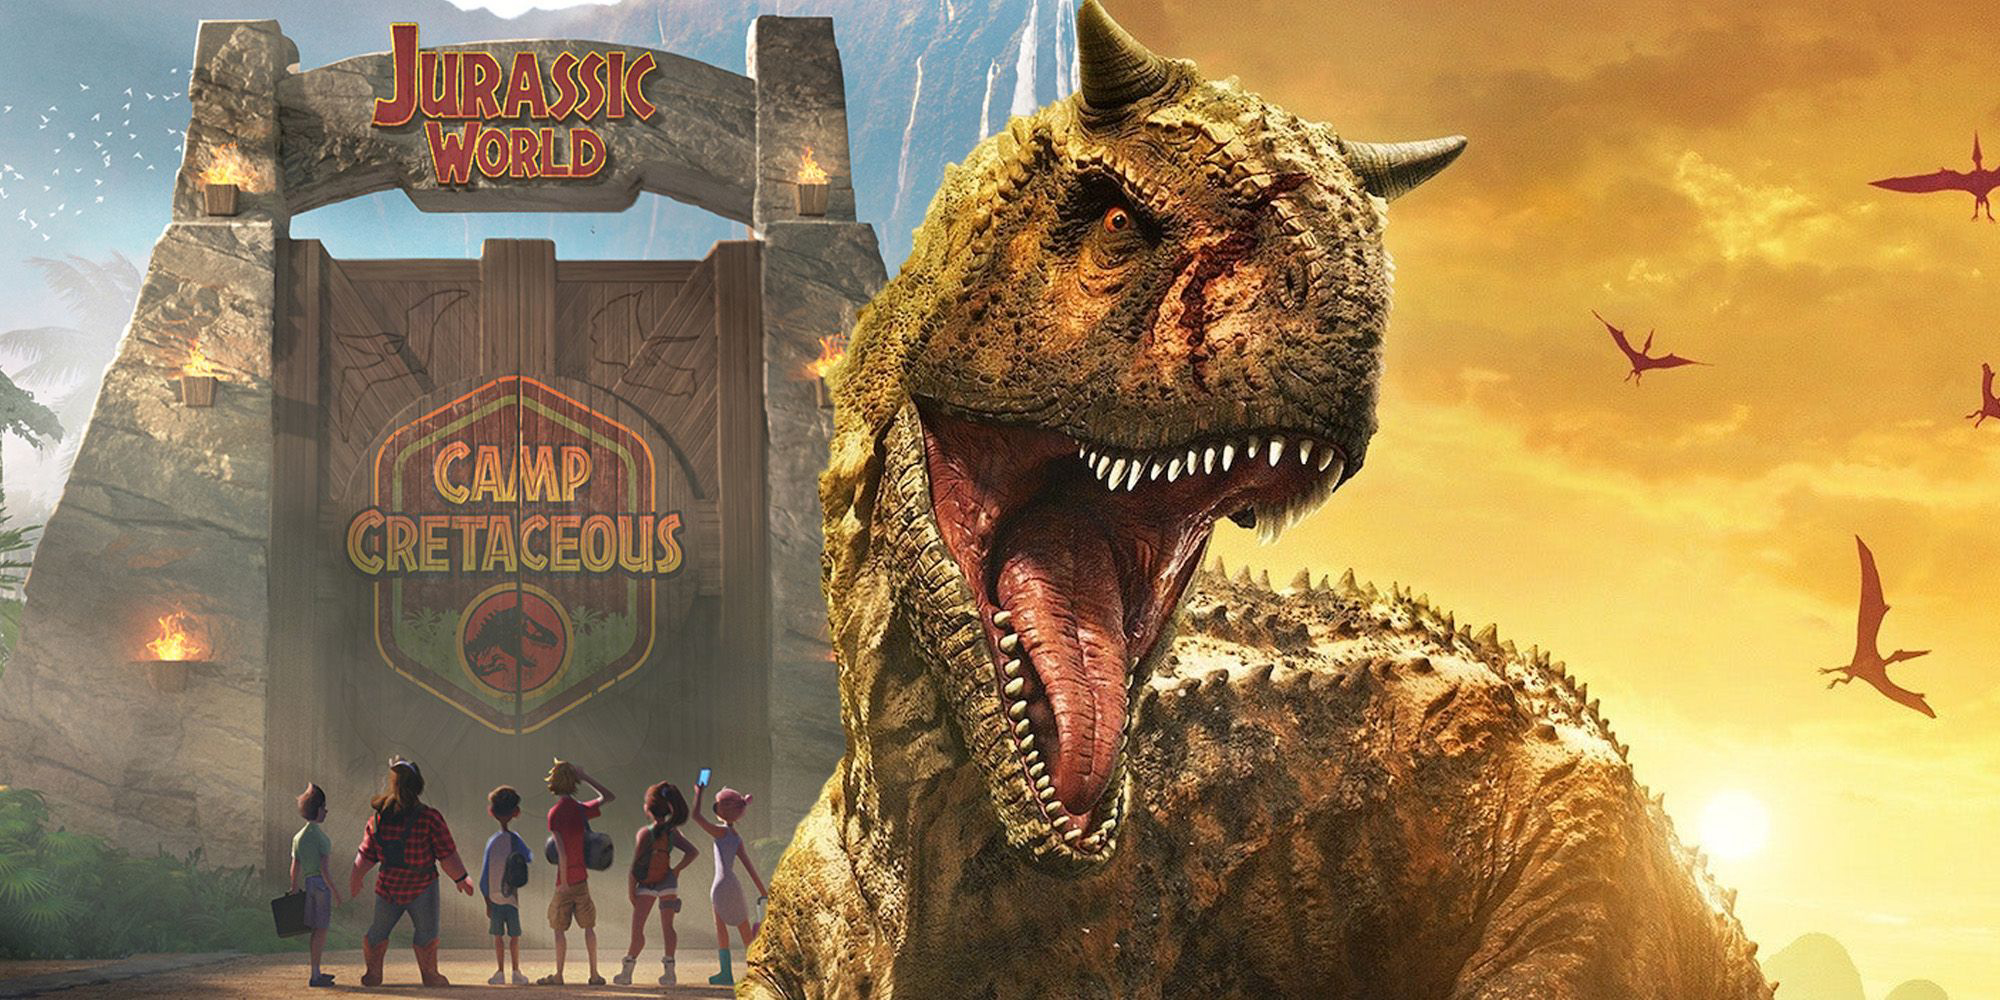 Jurassic World Camp Cretaceous (Season 3) / Jurassic World Camp Cretaceous (Season 3) (2021)